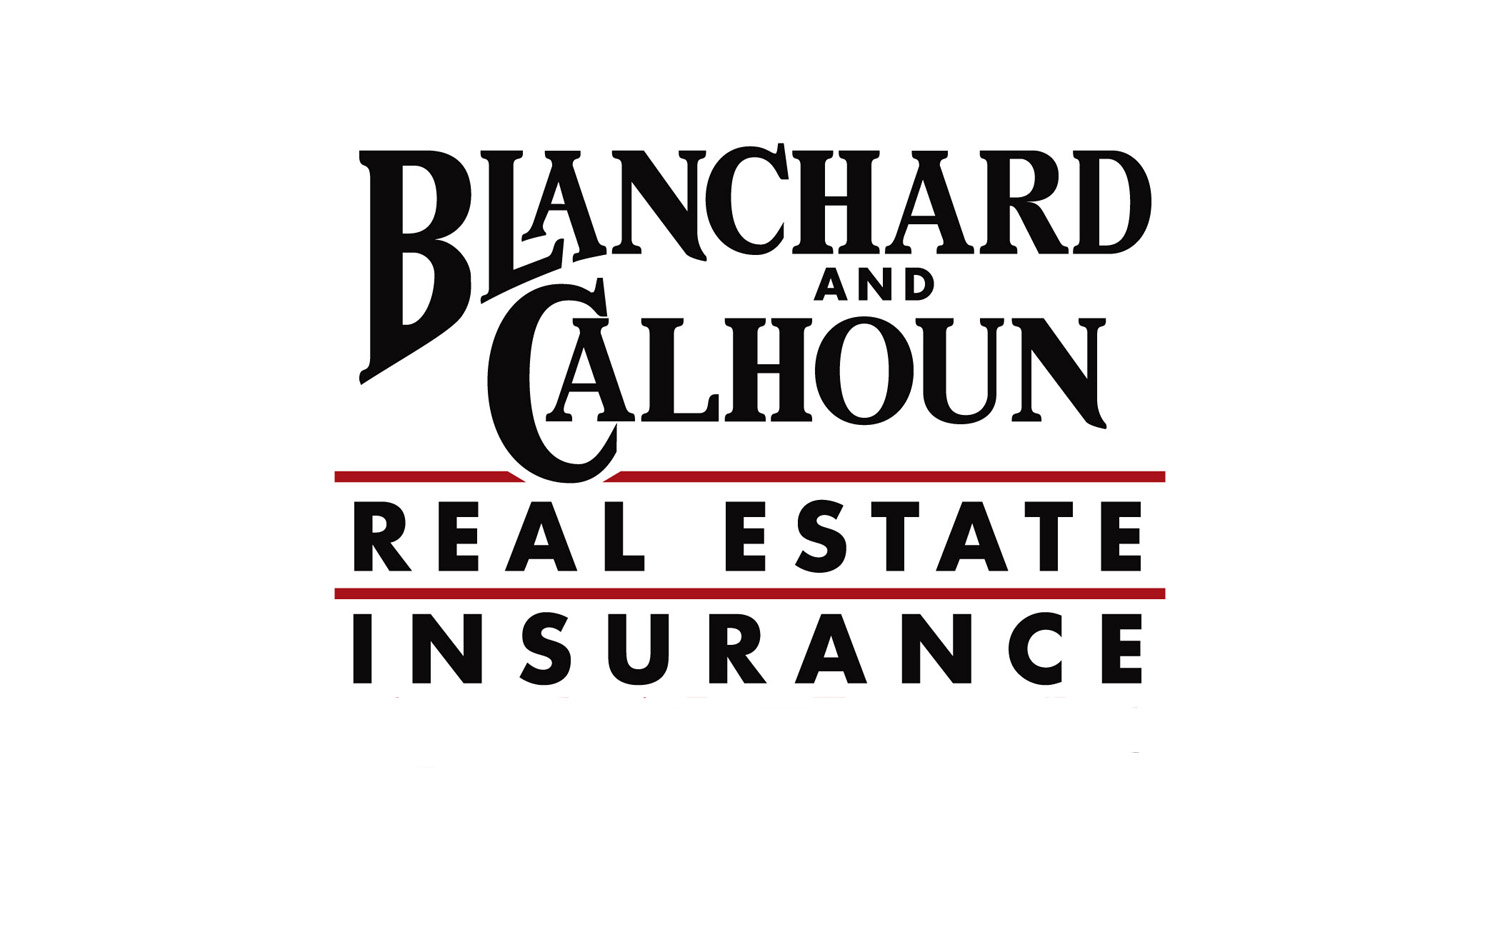 Blanchard and Calhoun Real Estate Co.